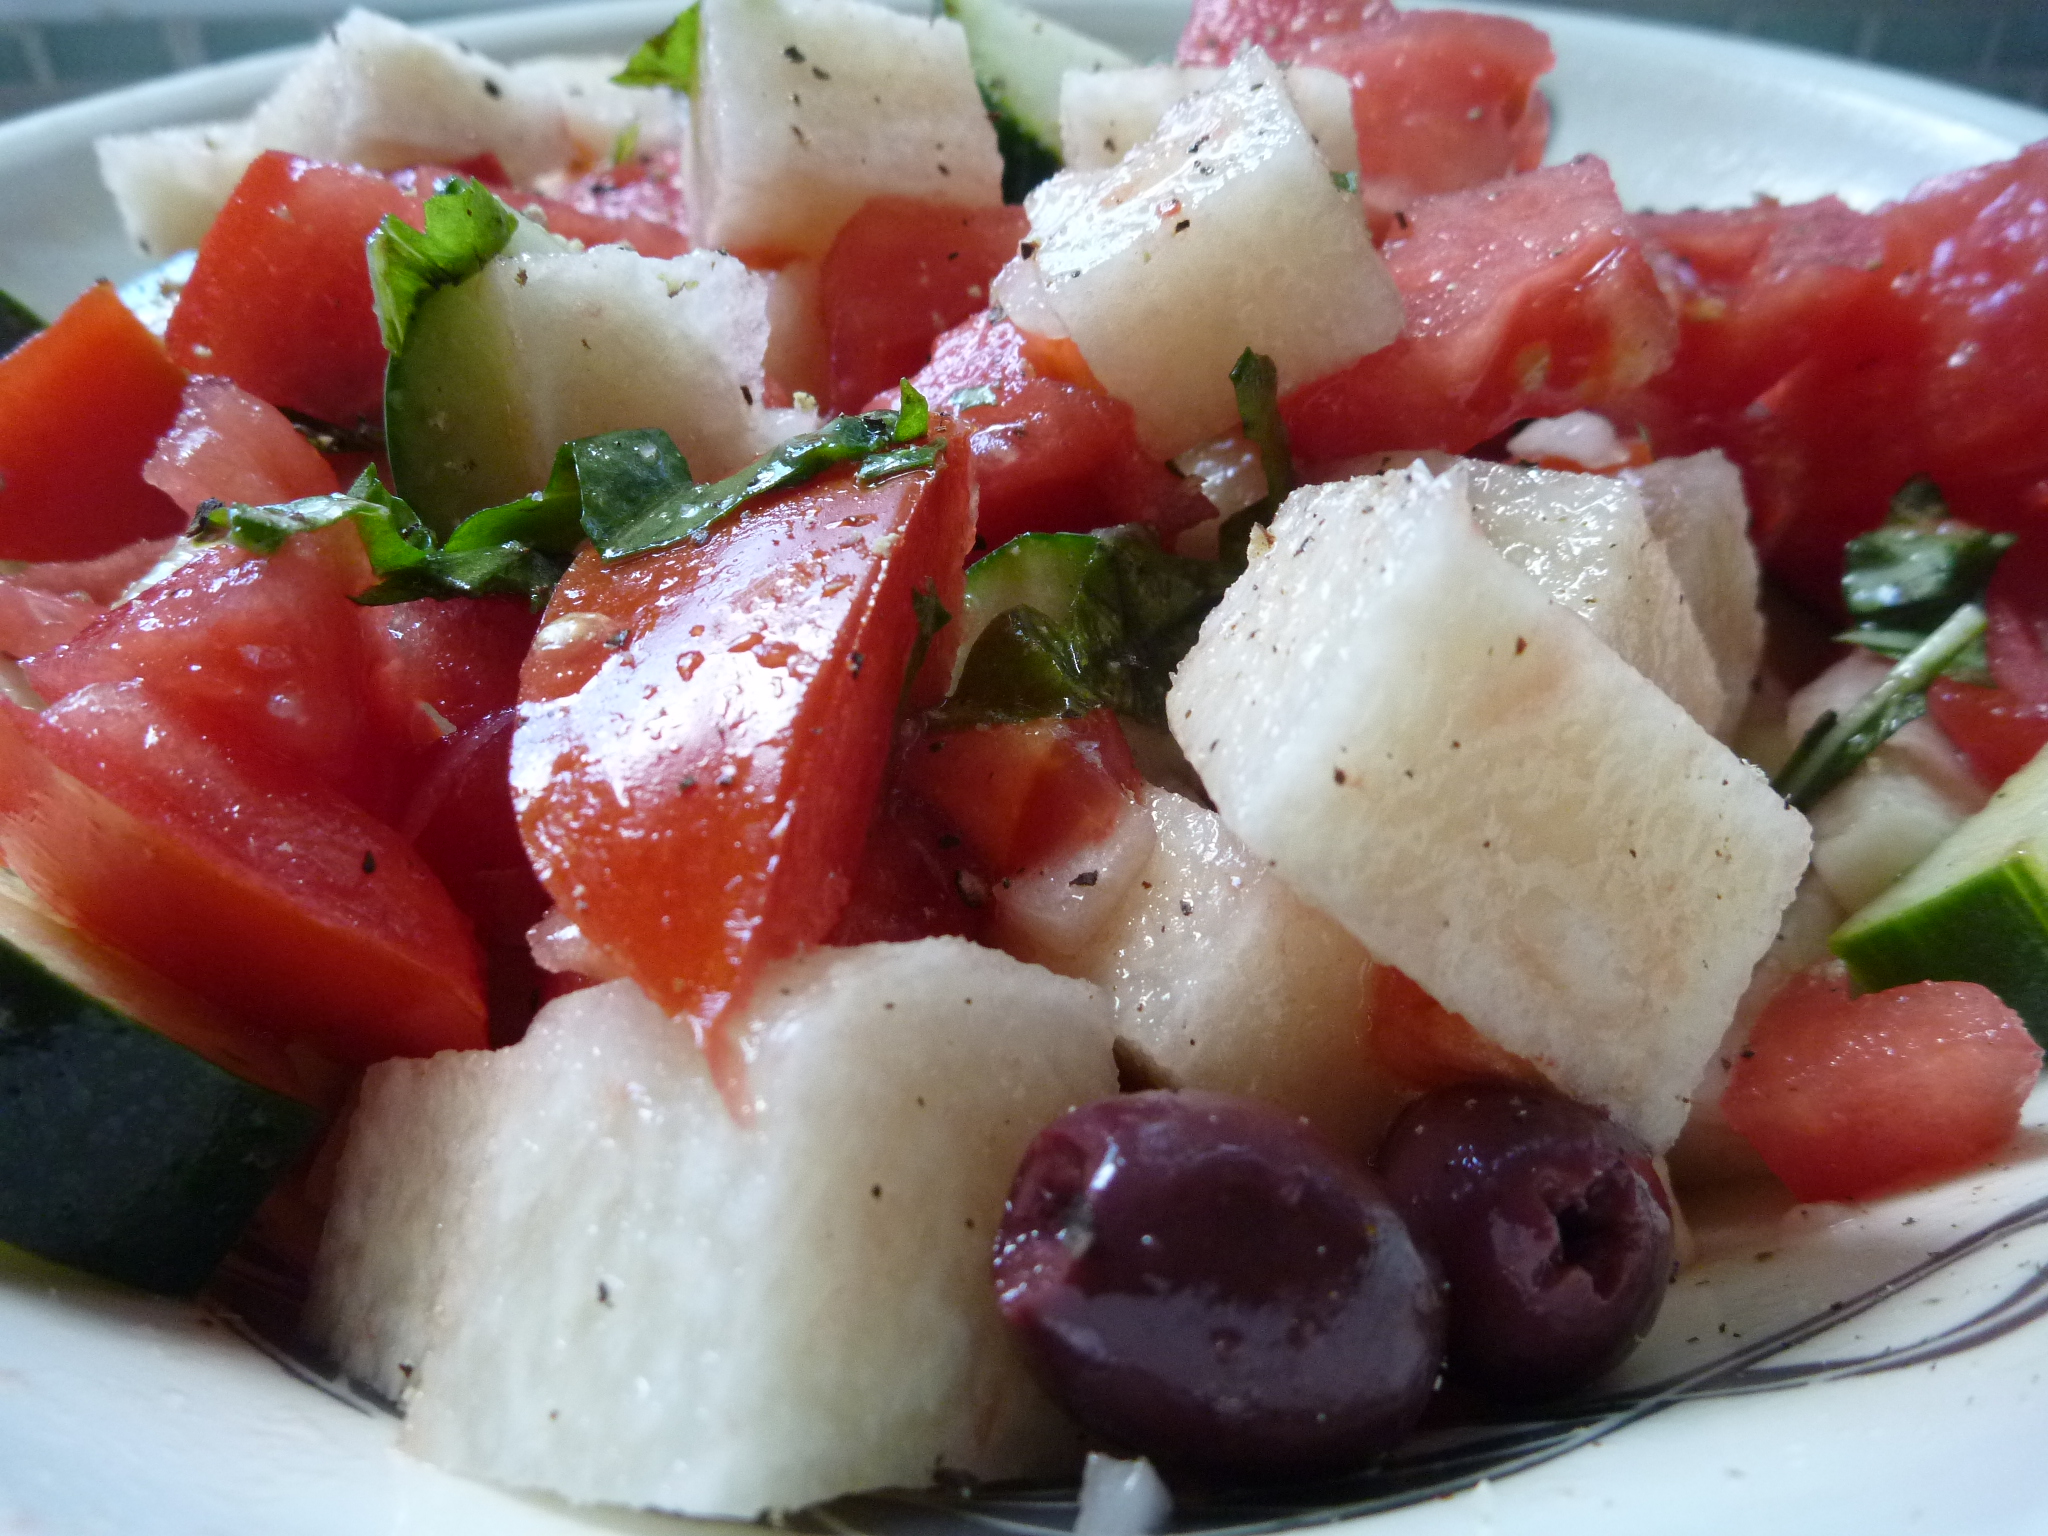 Simple Salad: Tomato, Jicama and Cucumber